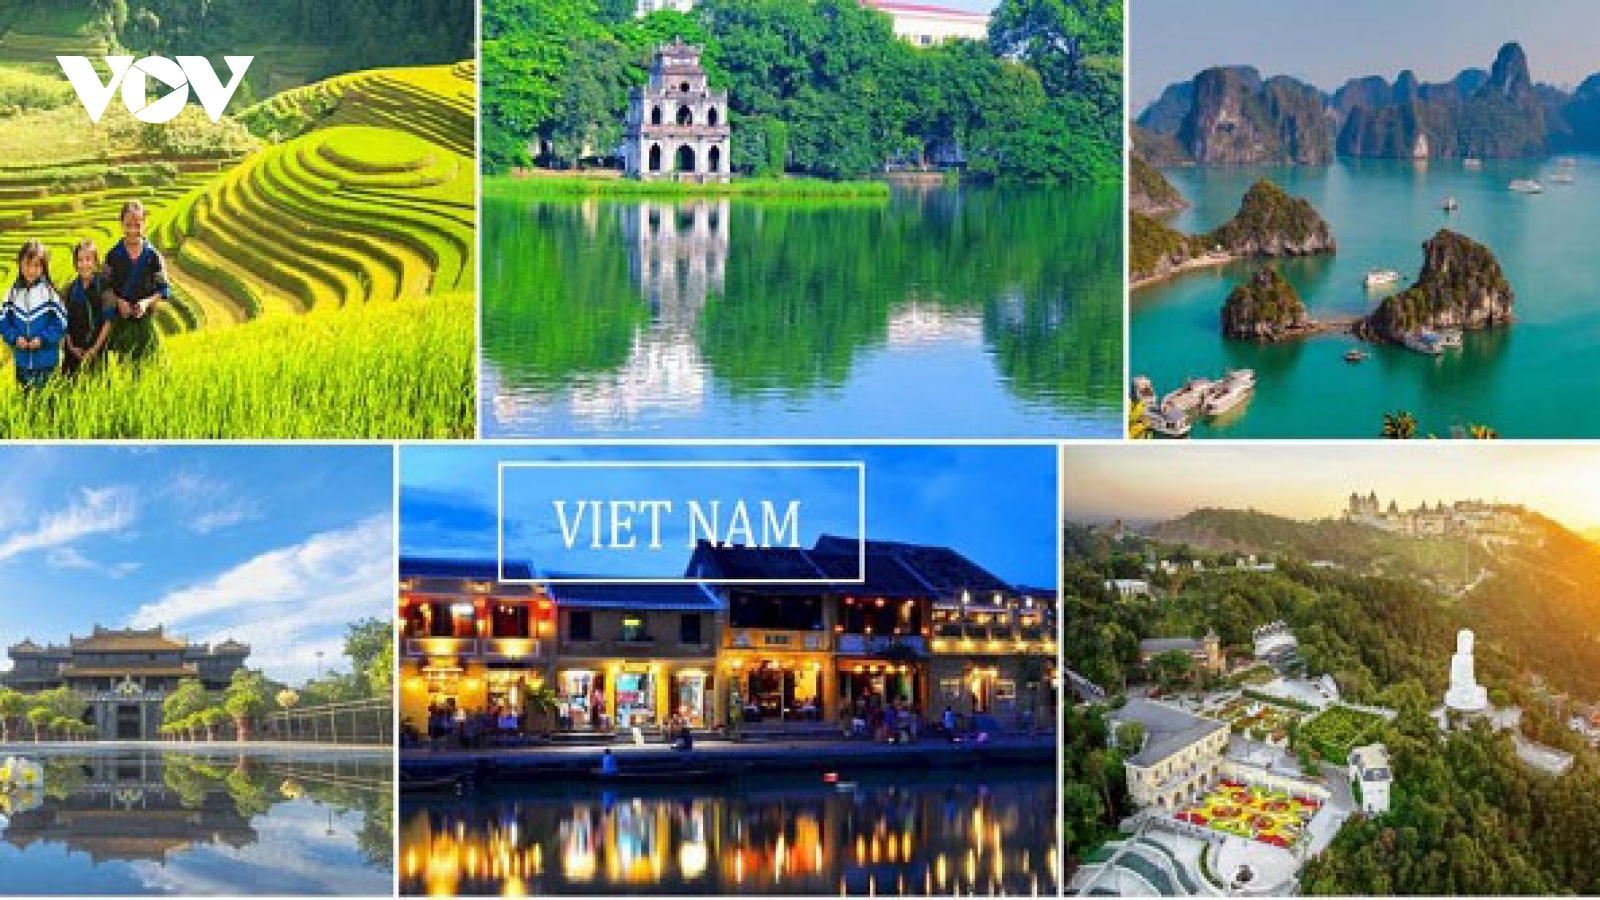 Vietnam wins several major prizes at 2022 World Travel Awards